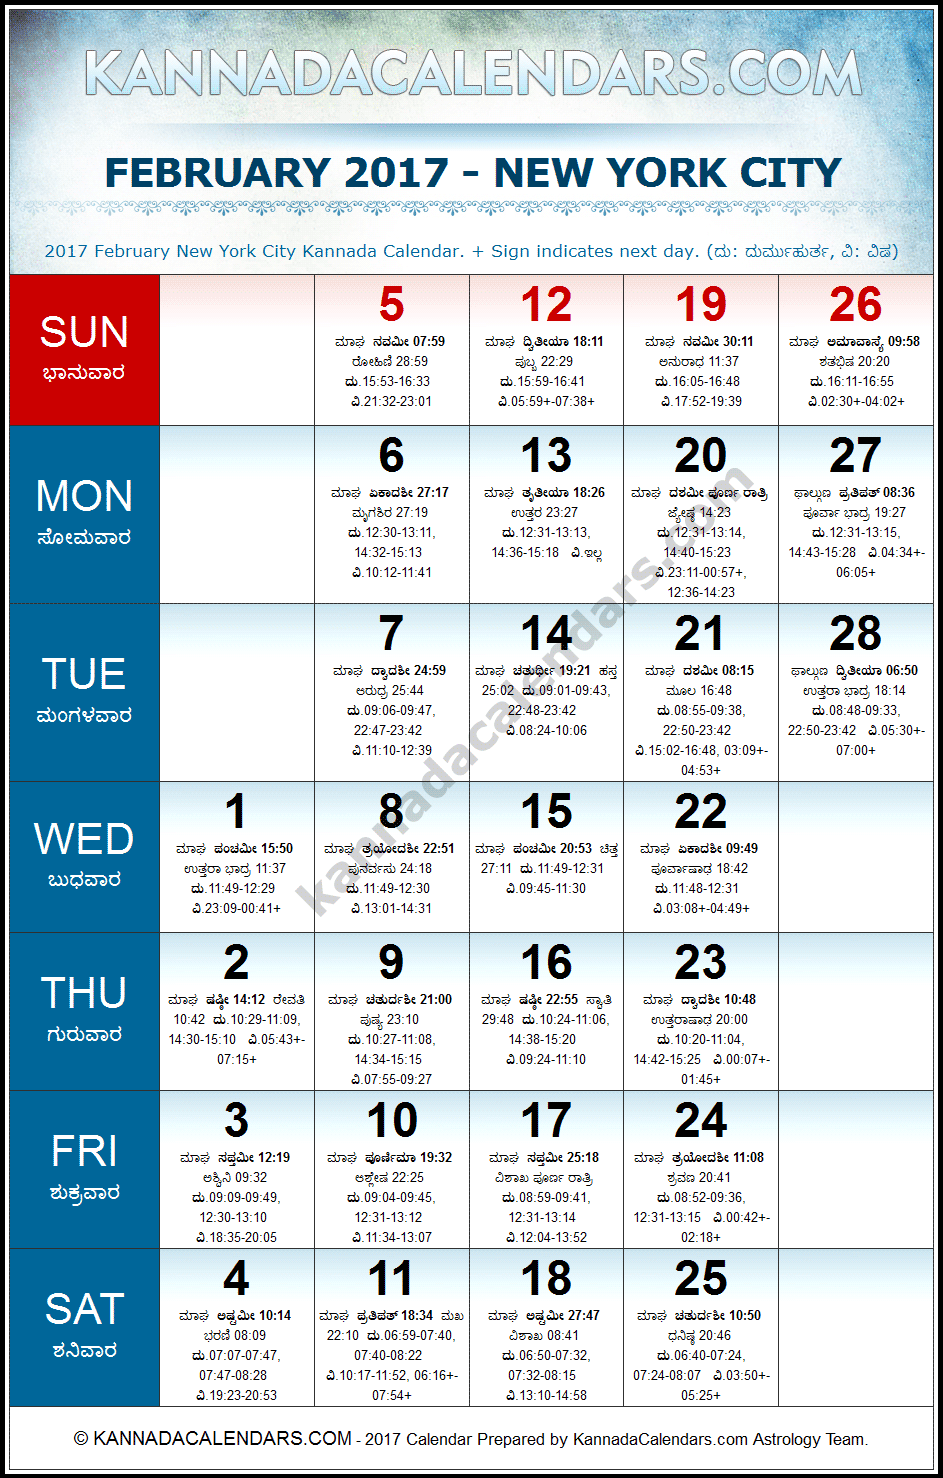 February 2017 Kannada Calendar for New York, USA